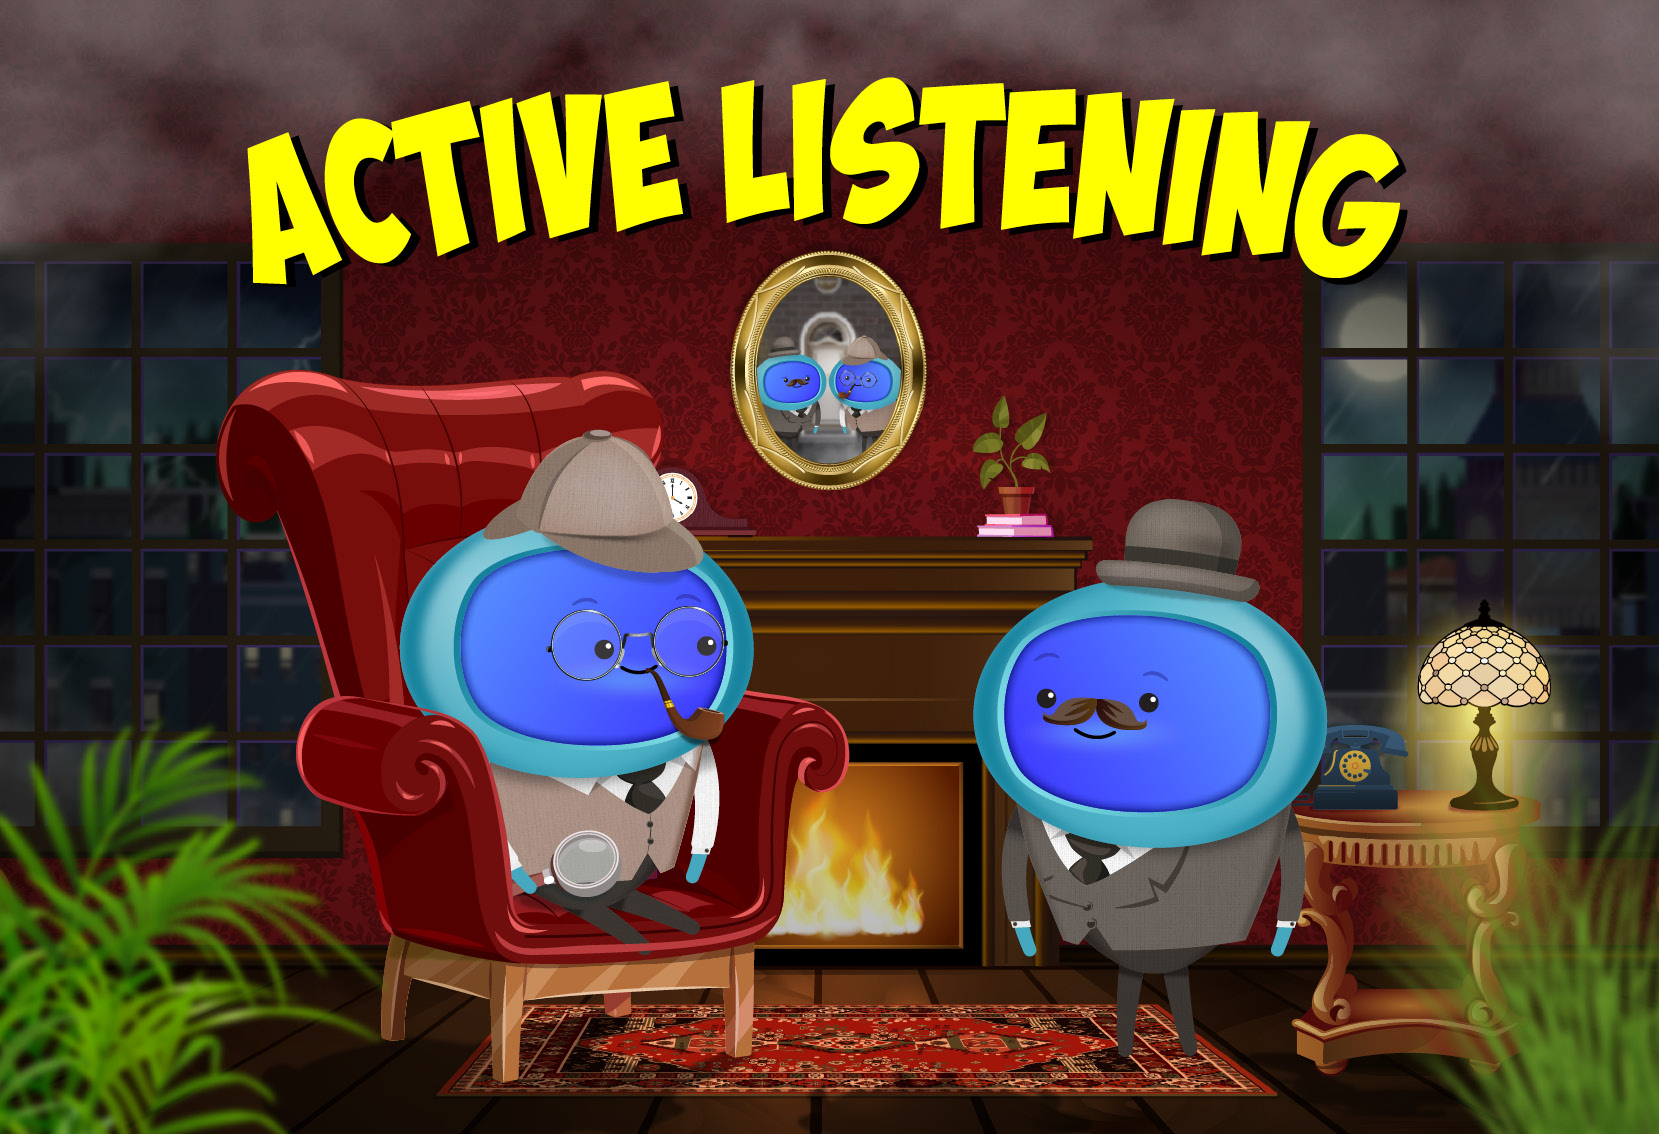 iAM 00280 - Active Listening - LMS Thumbnails